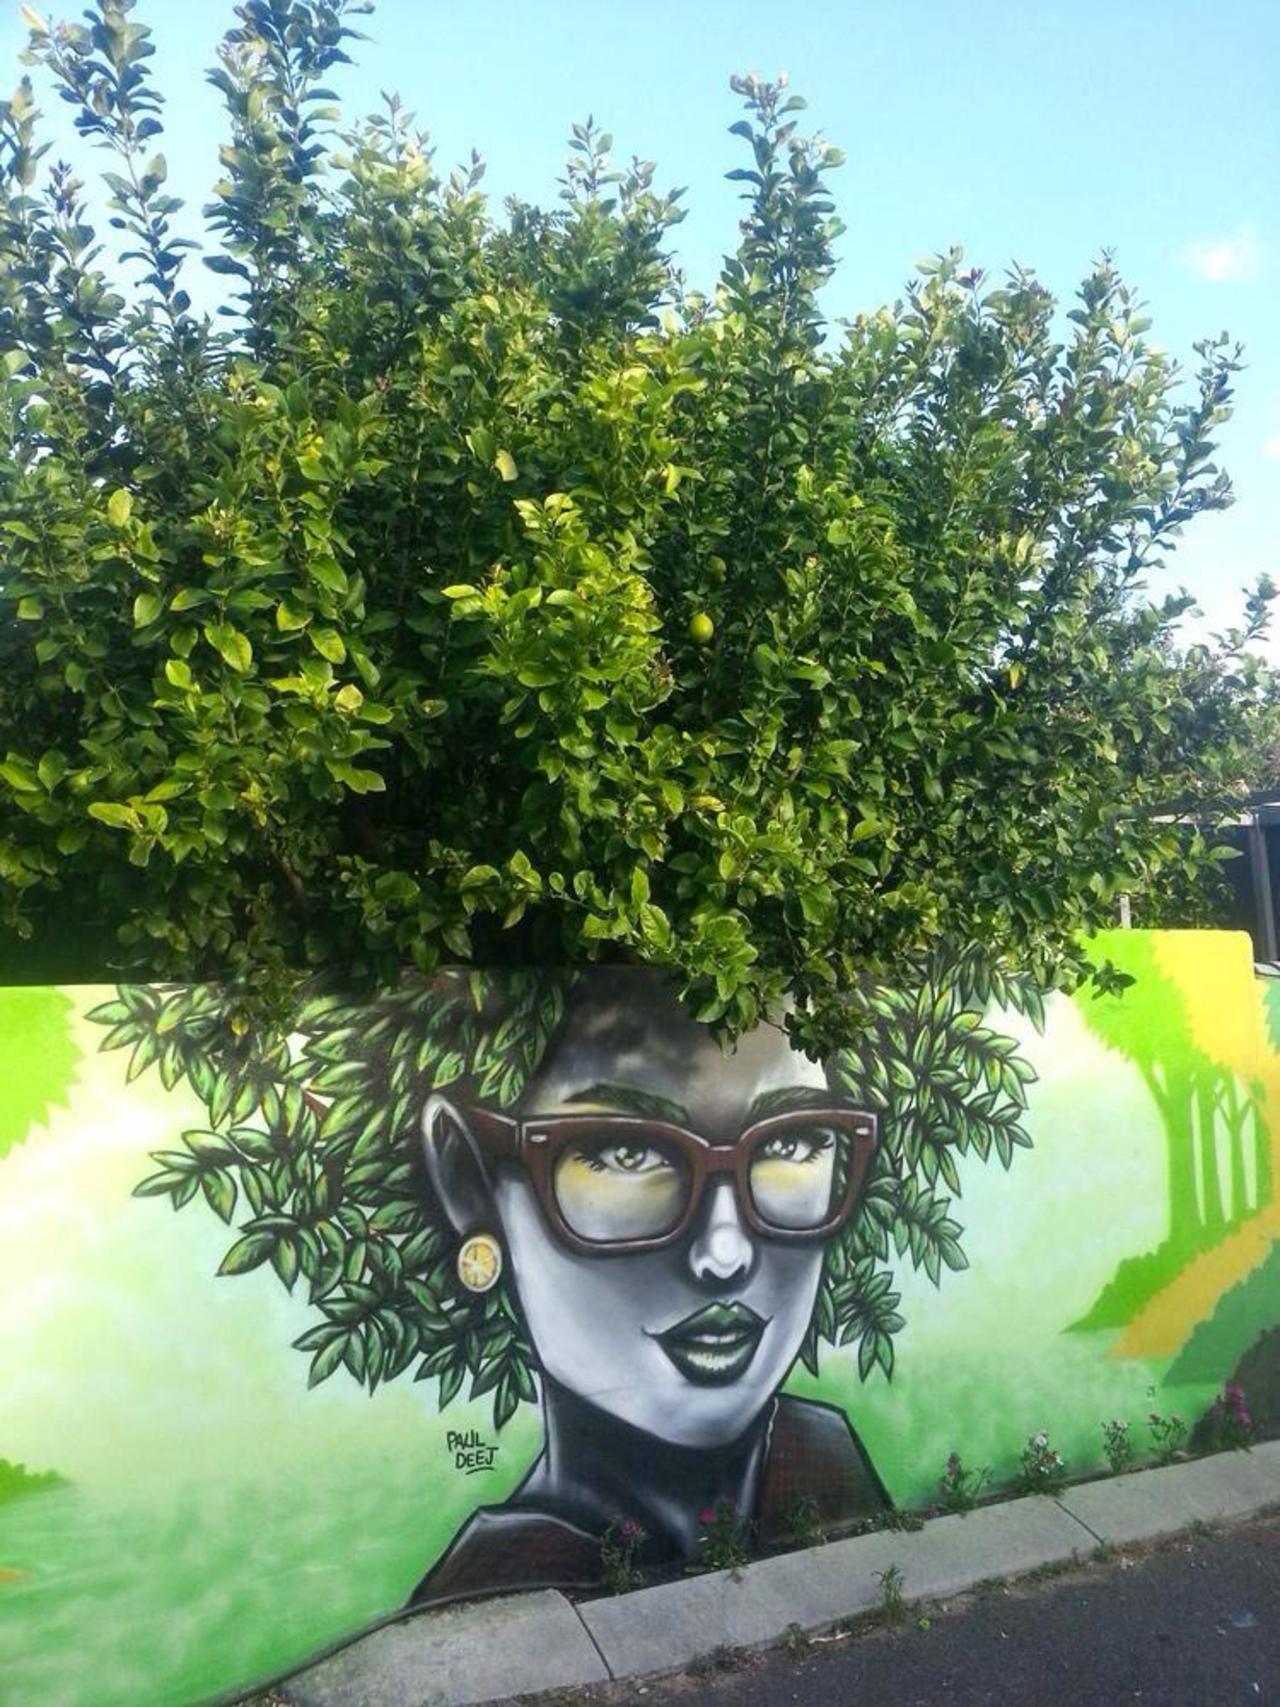 RT @AnneMortier1

Artist #Paul_Deej - When Street Art meets Nature - Perth, Australia #art #streetart

http://t.co/TkKcfCrSLm